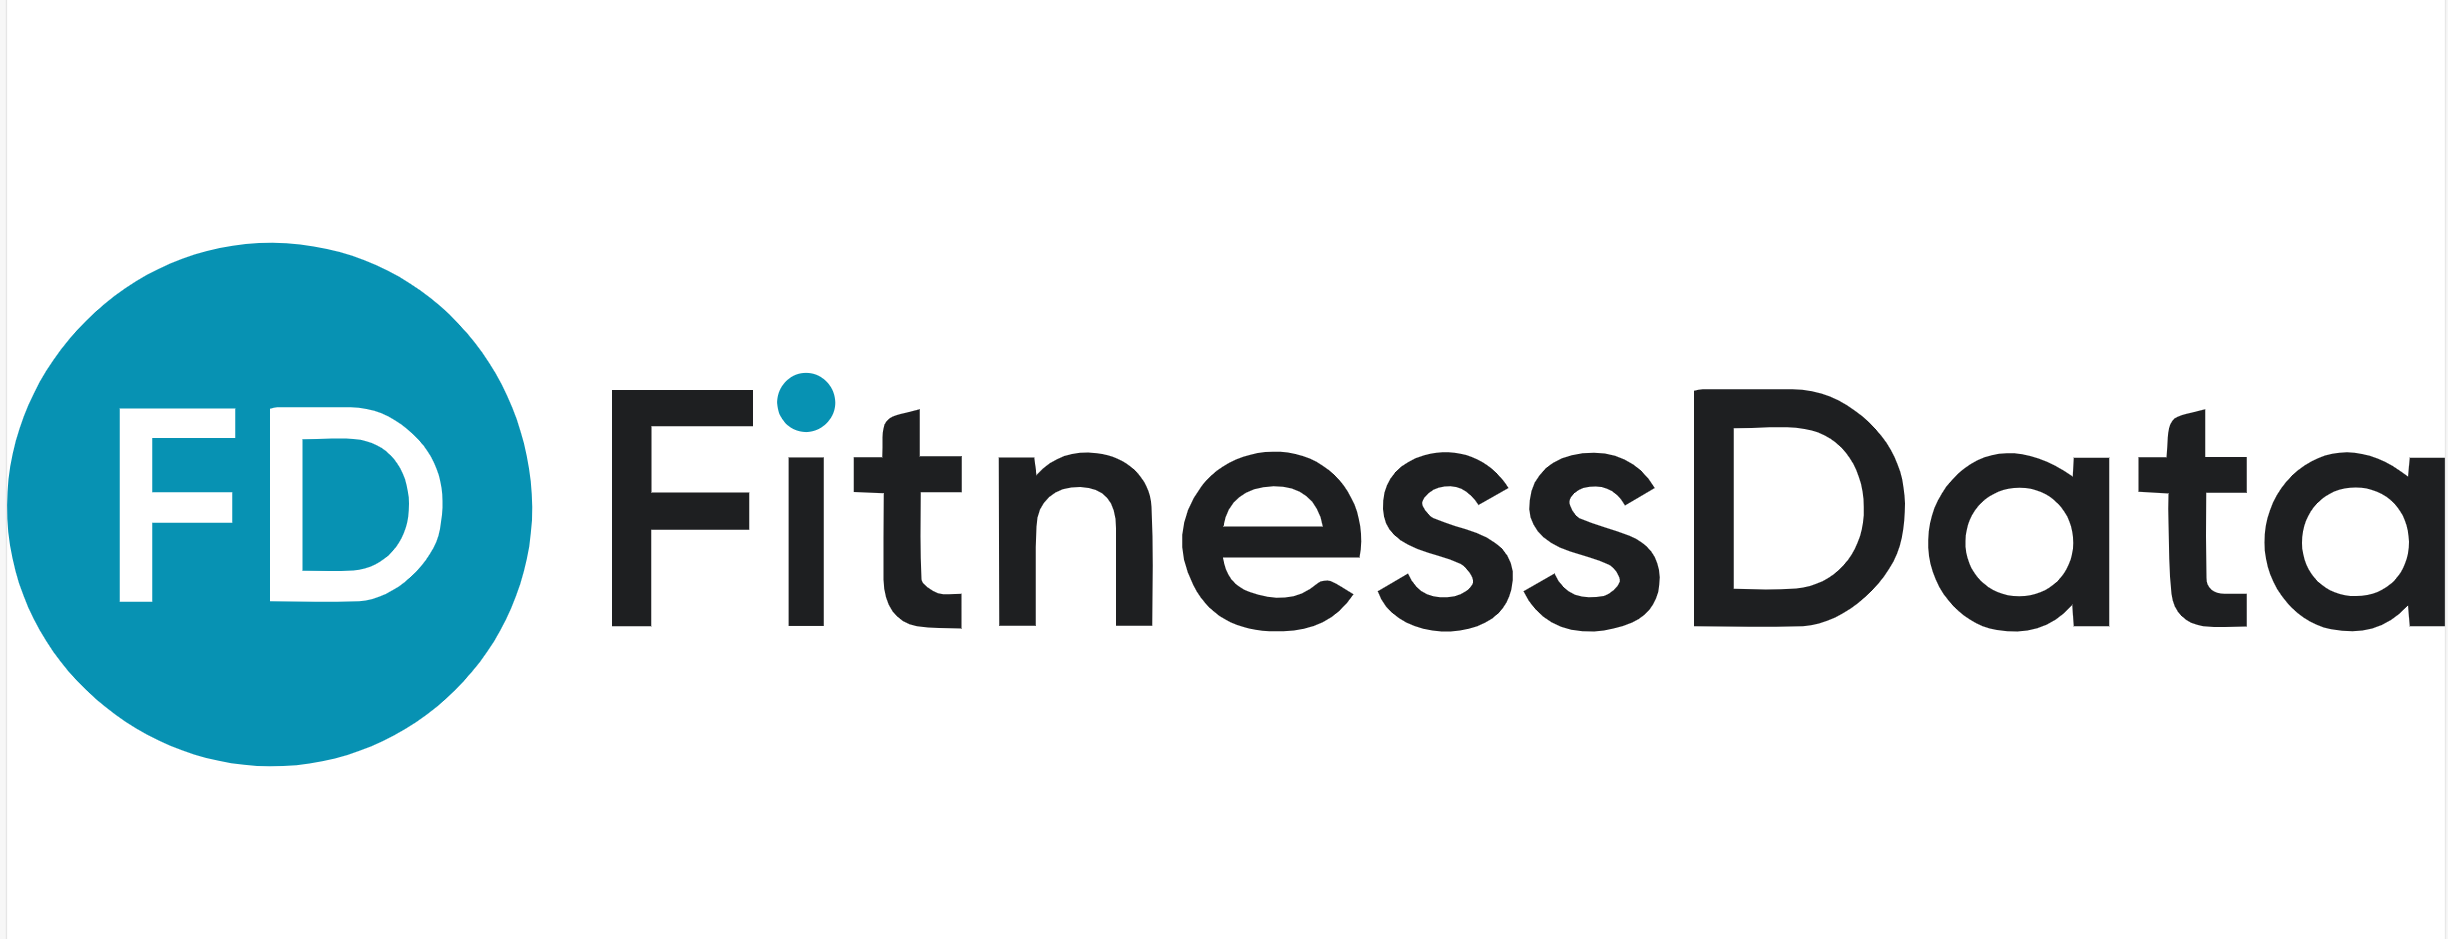 FitnessData